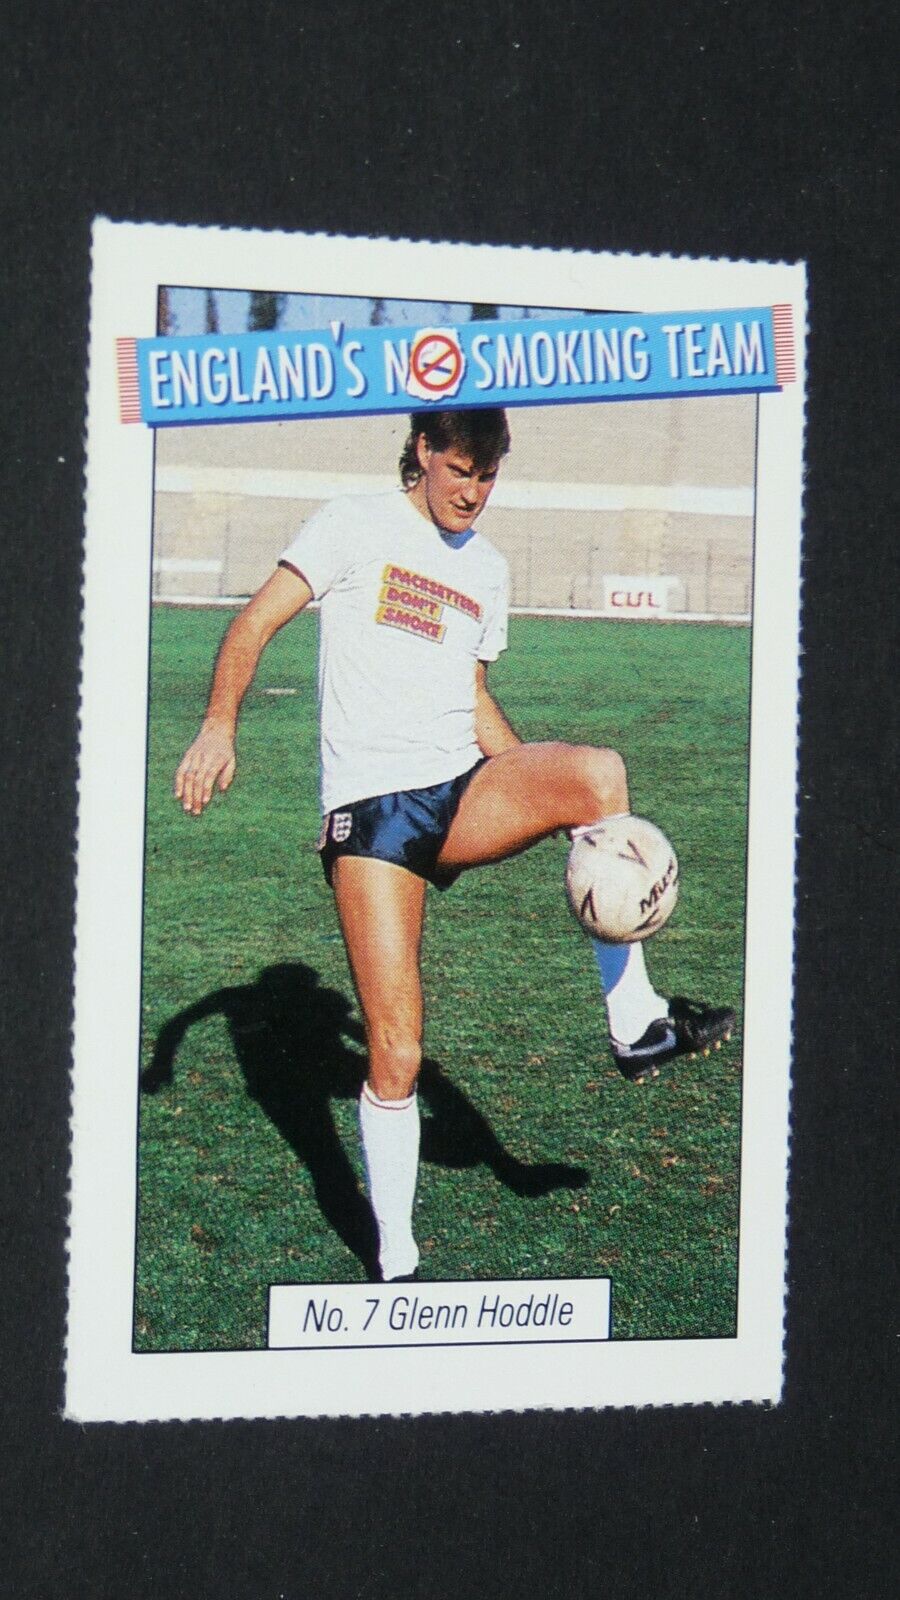 1986 ENGLAND\'S NO SMOKING TEAM CARD FOOTBALL #7 GLENN HODDLE ANGLATERRE SPURS